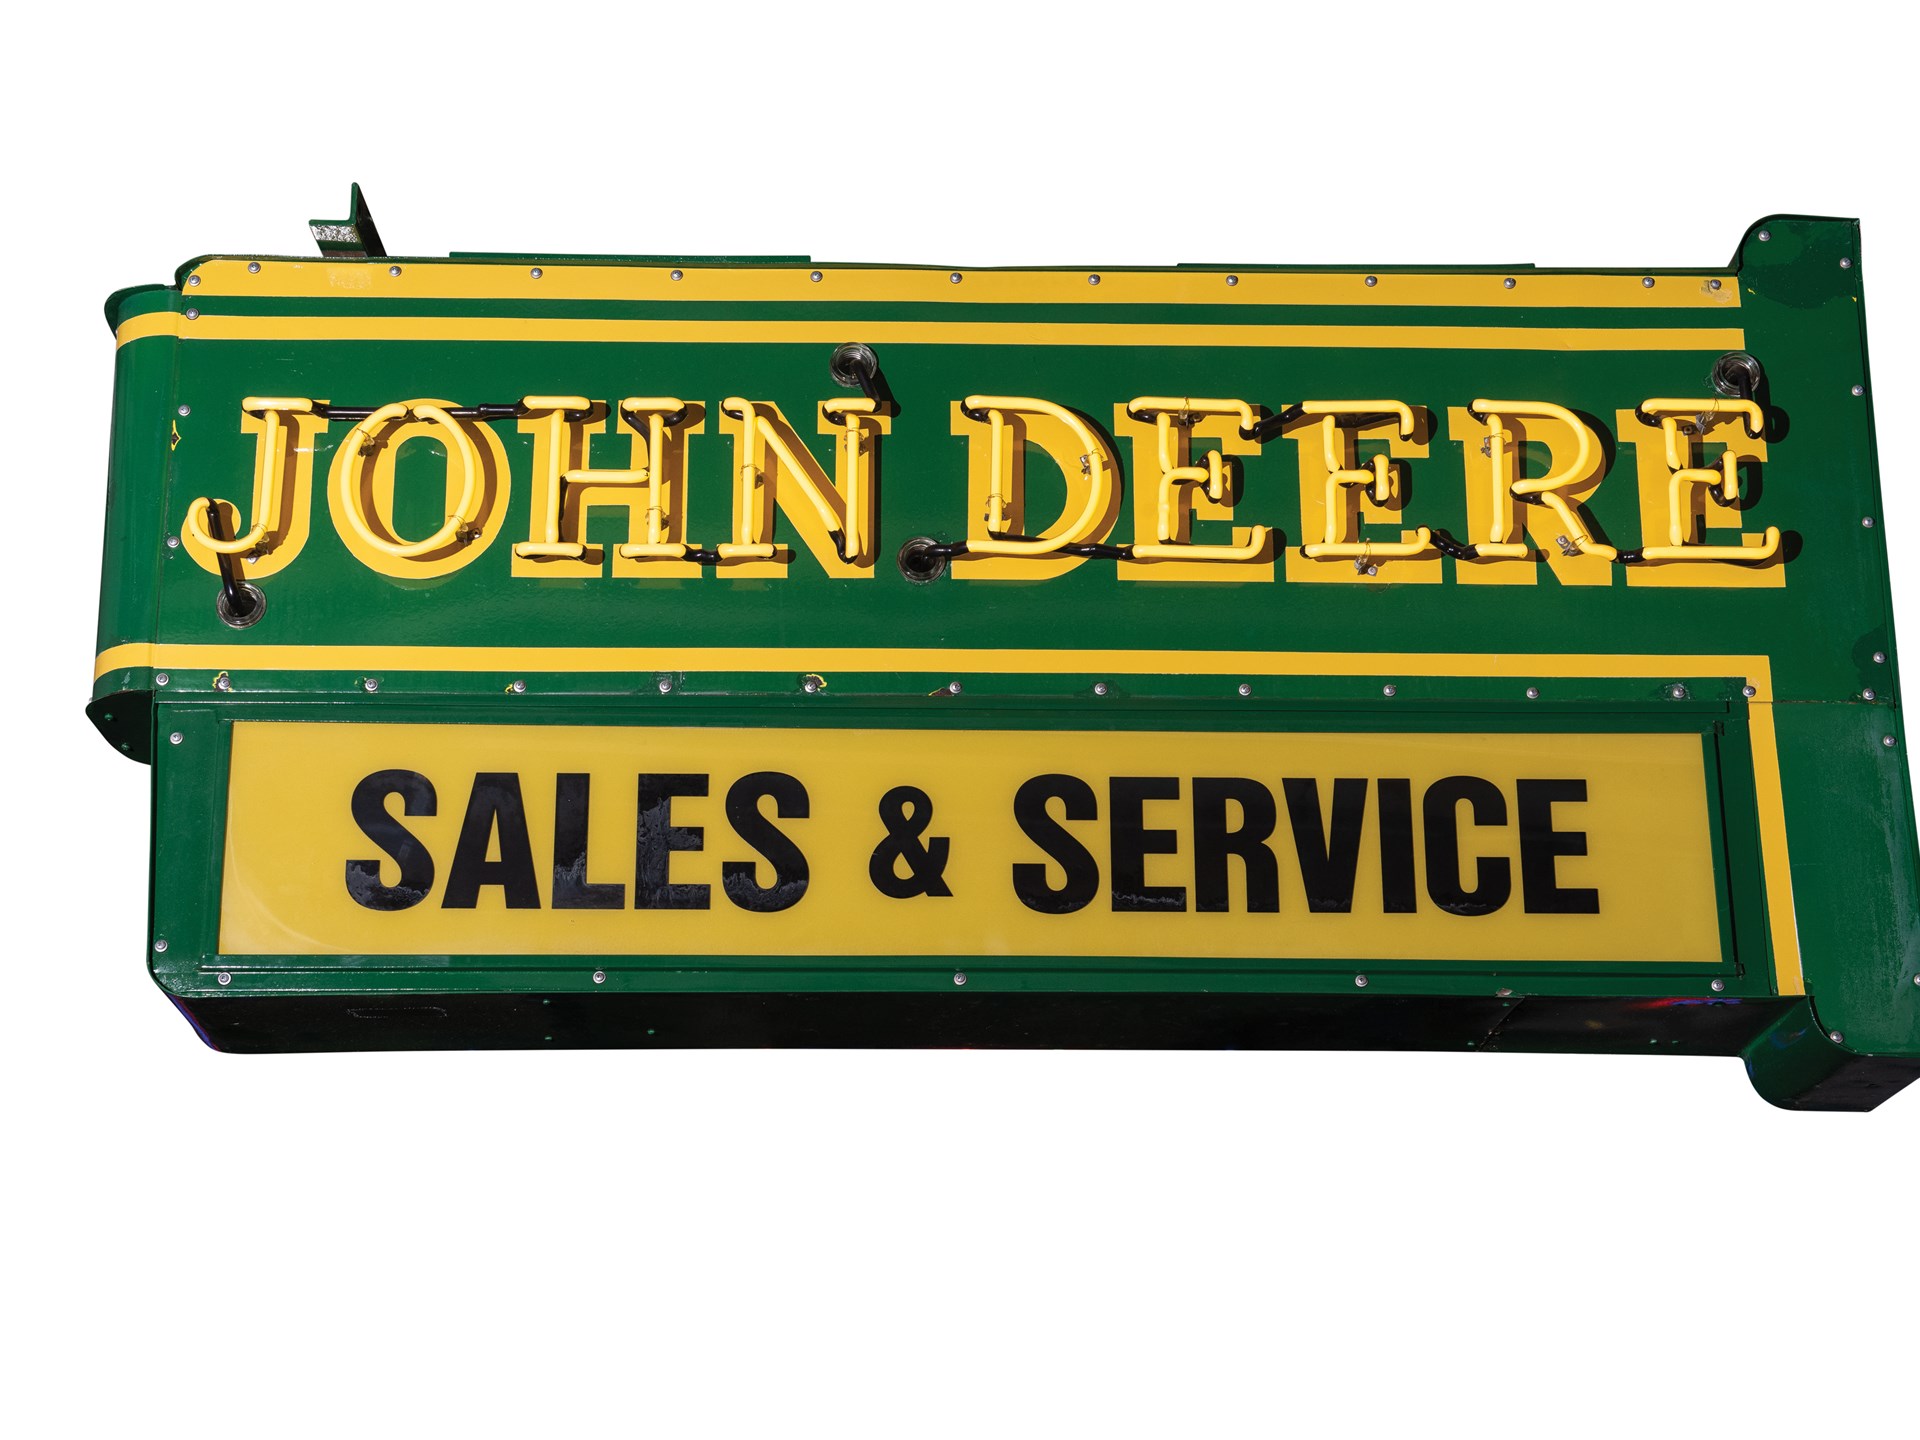 John Deere Sales & Service DoubleSided Neon Sign The Dingman